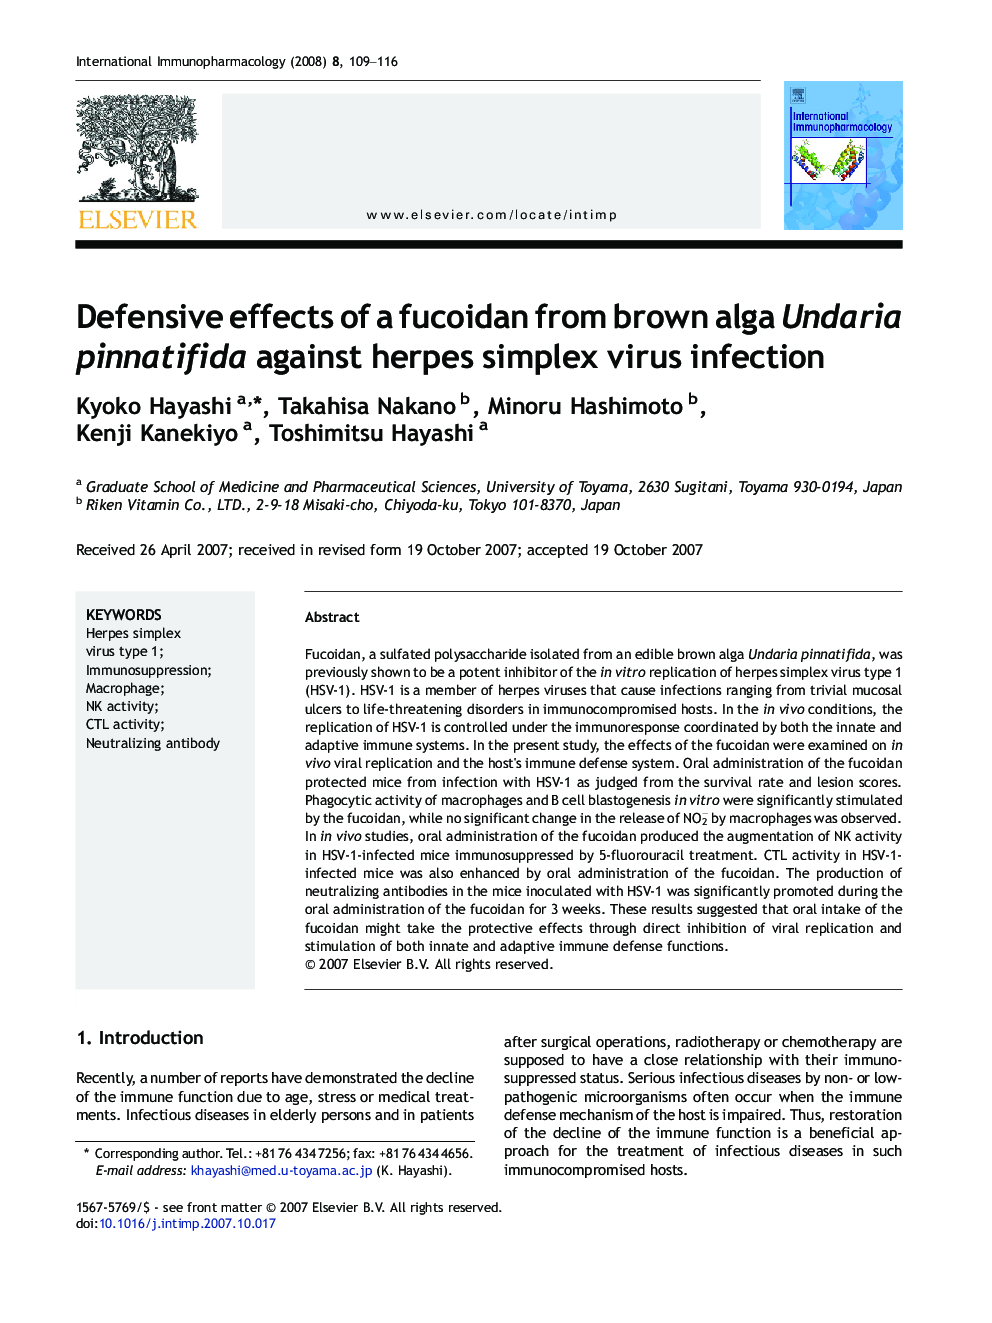 Defensive effects of a fucoidan from brown alga Undaria pinnatifida against herpes simplex virus infection